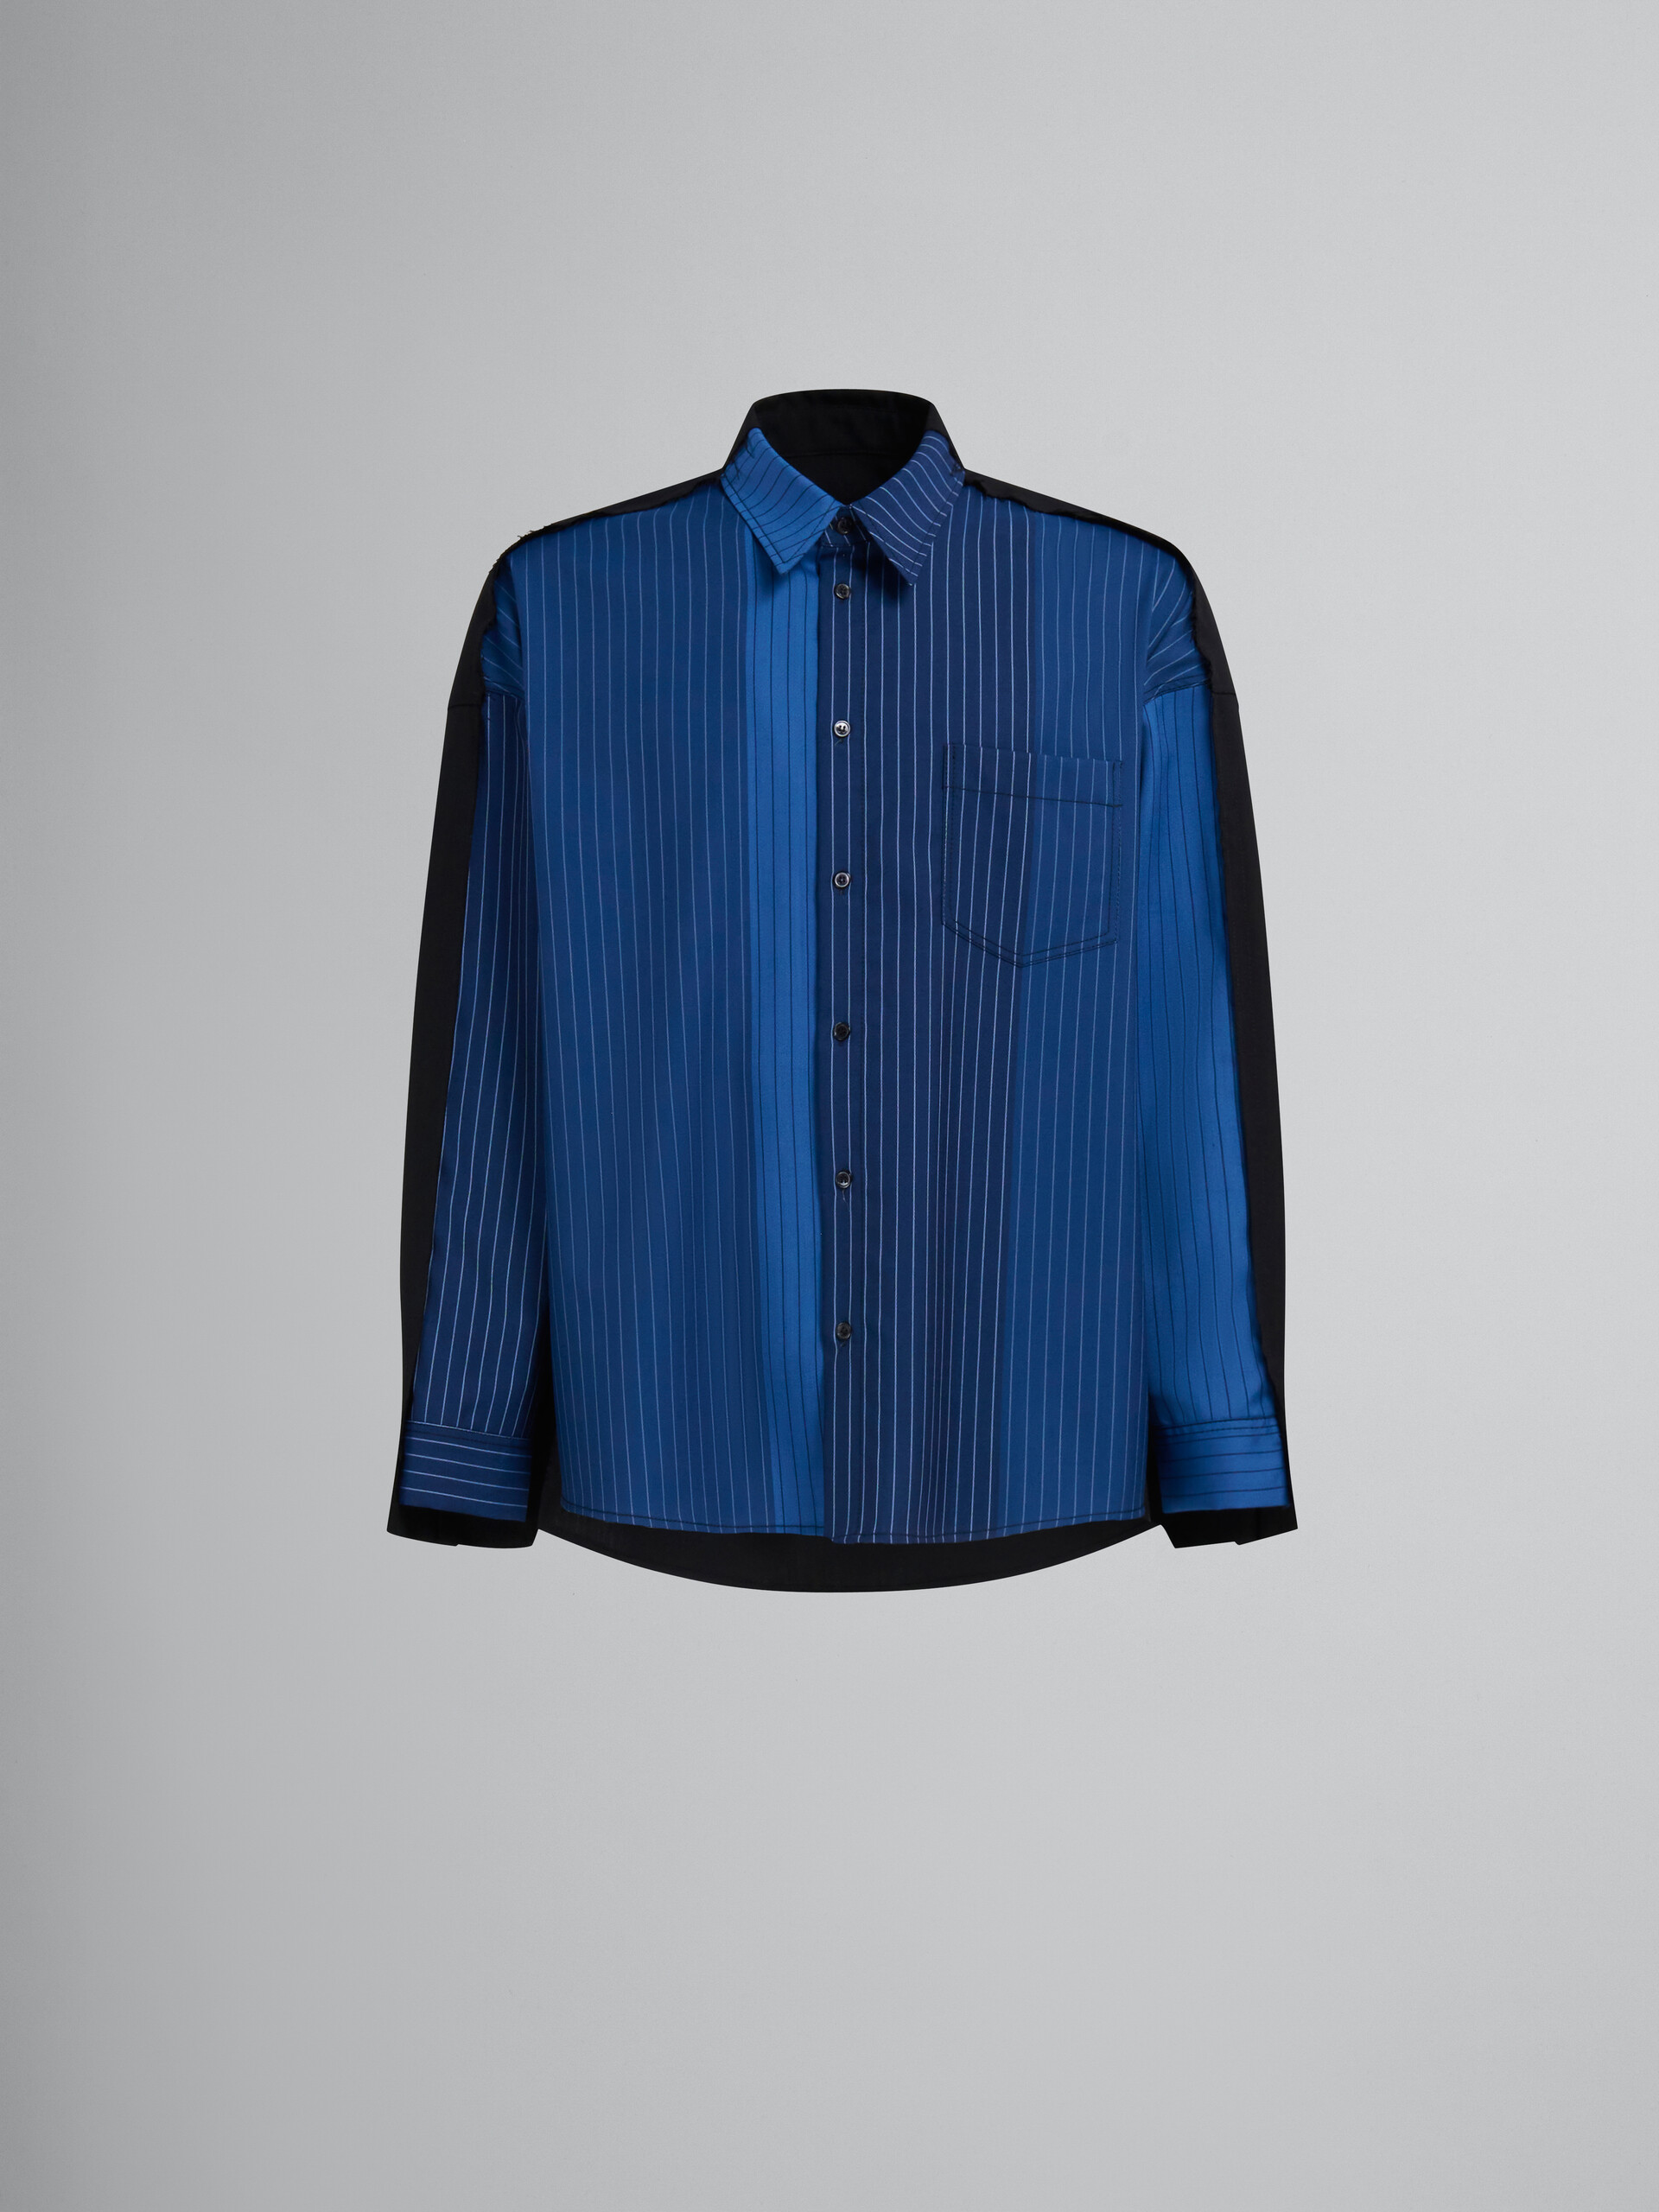 Camicia in lana gessata blu dégradé con retro a contrasto - Camicie - Image 1